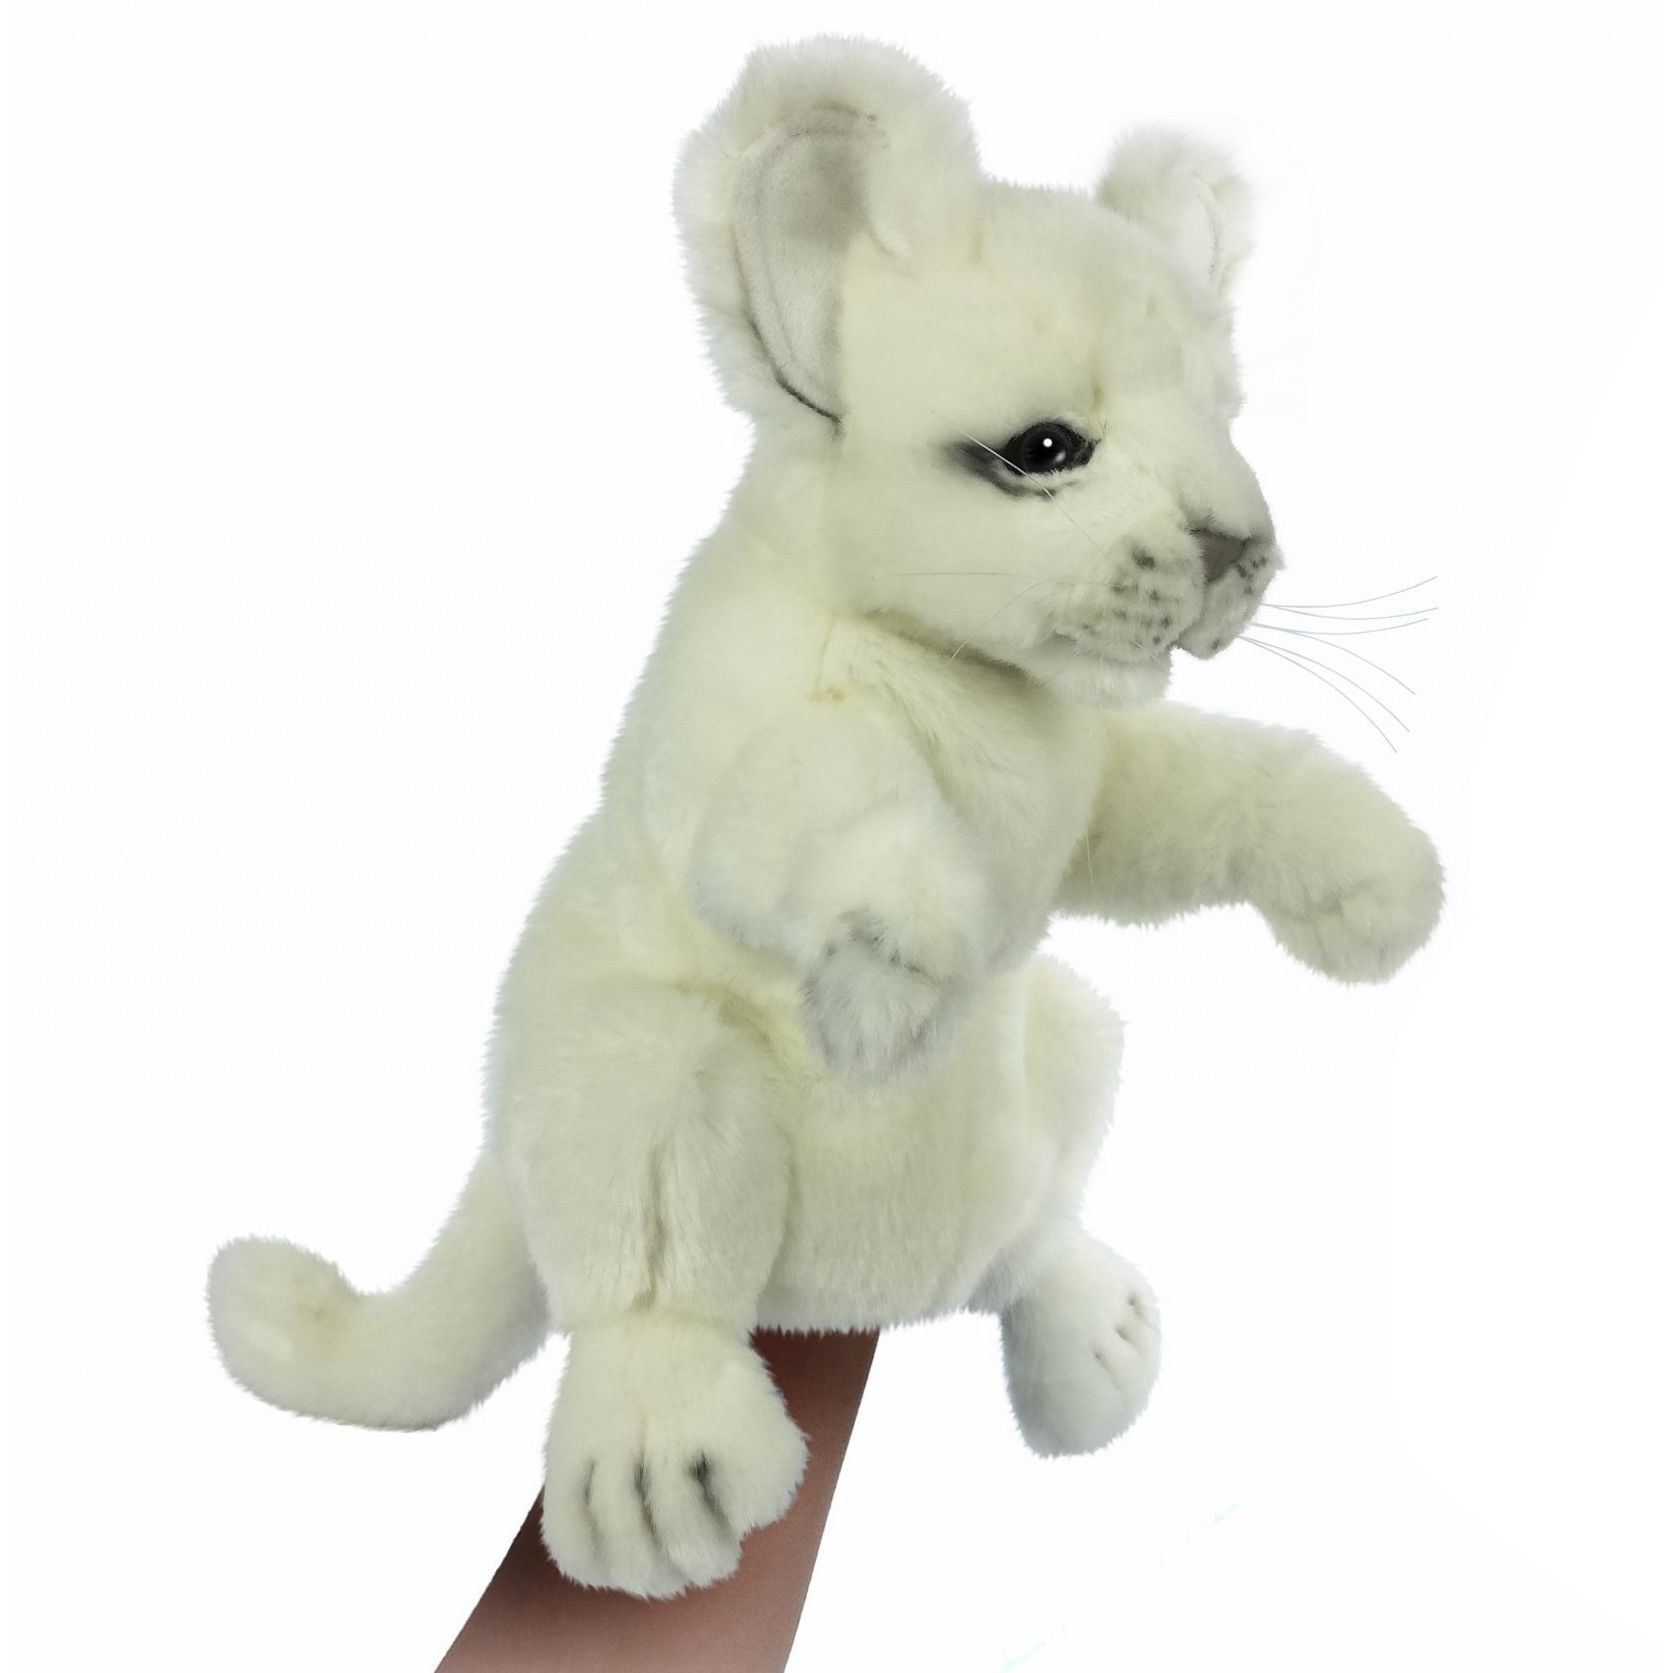 М'яка іграшка на руку Hansa Puppet Біле левеня, 32 см, біла (7850) - фото 1